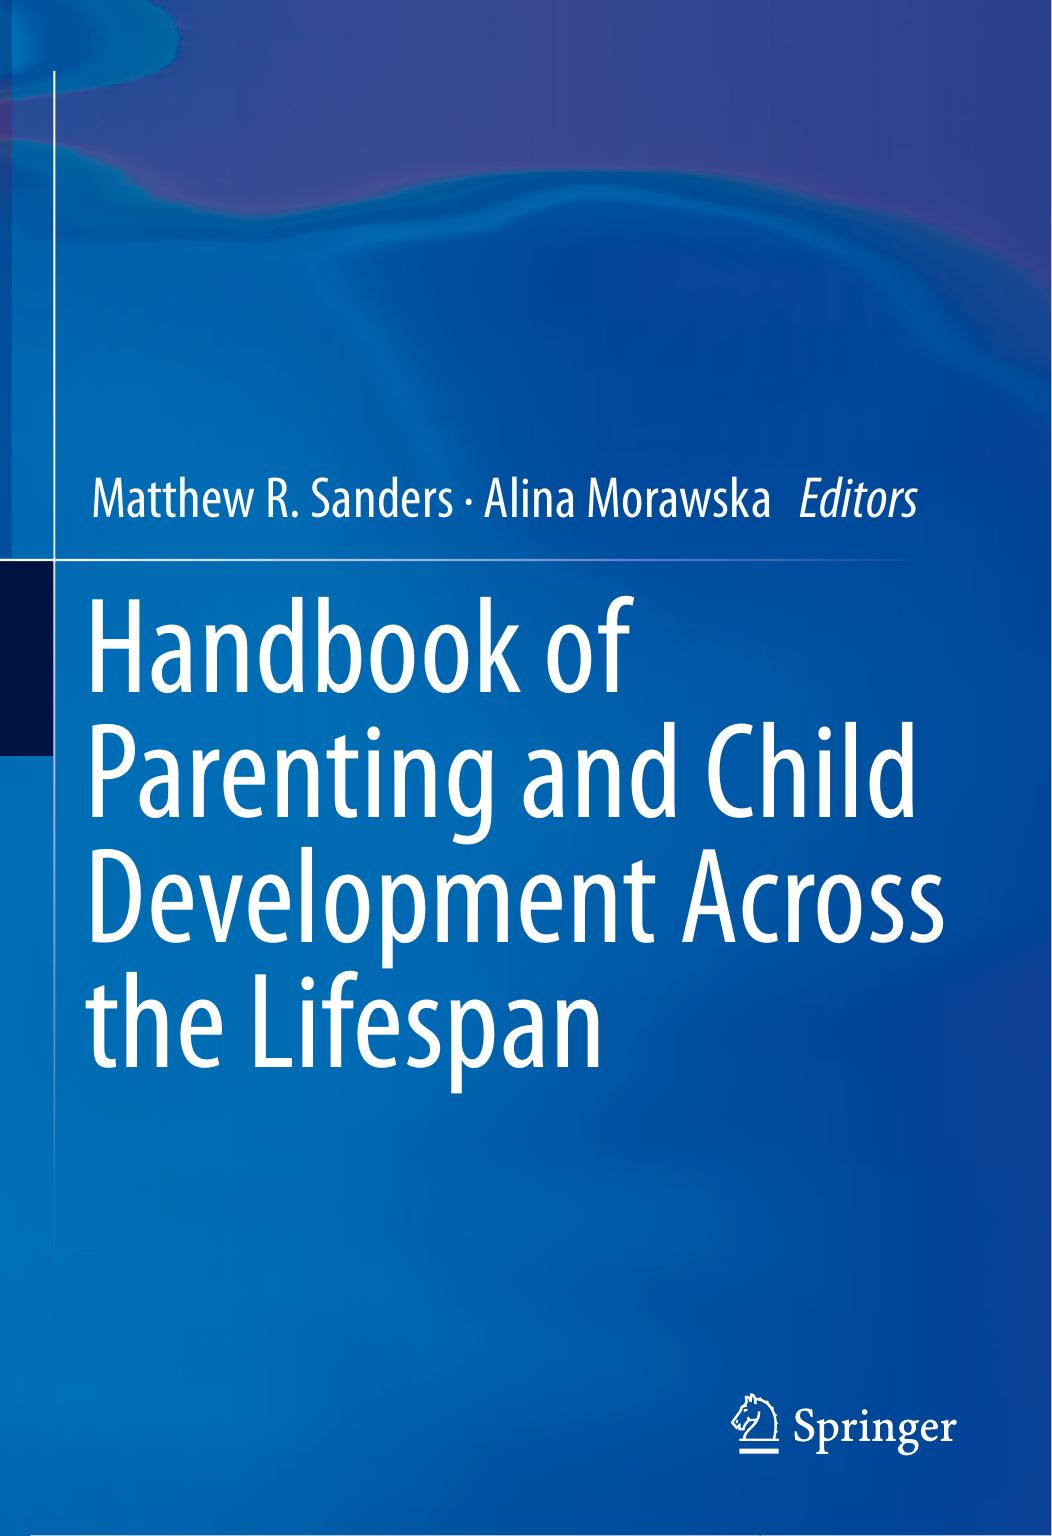 Handbook of Parenting and Child Development Across the Lifespan 2018